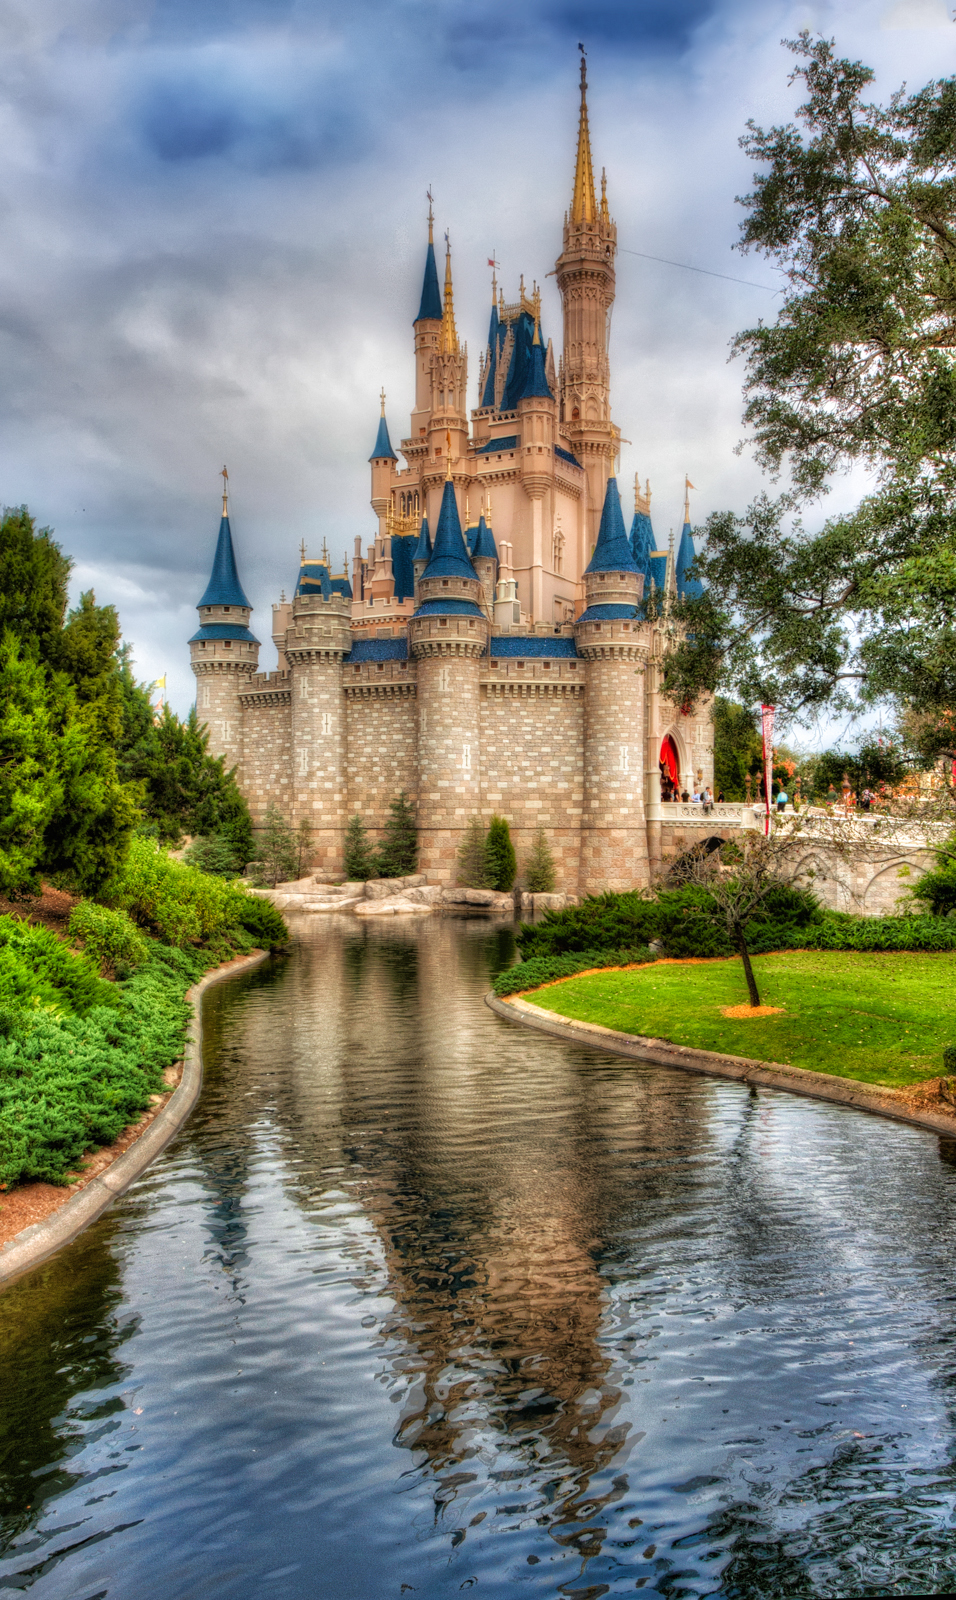 Cinderella's Castle Reflected